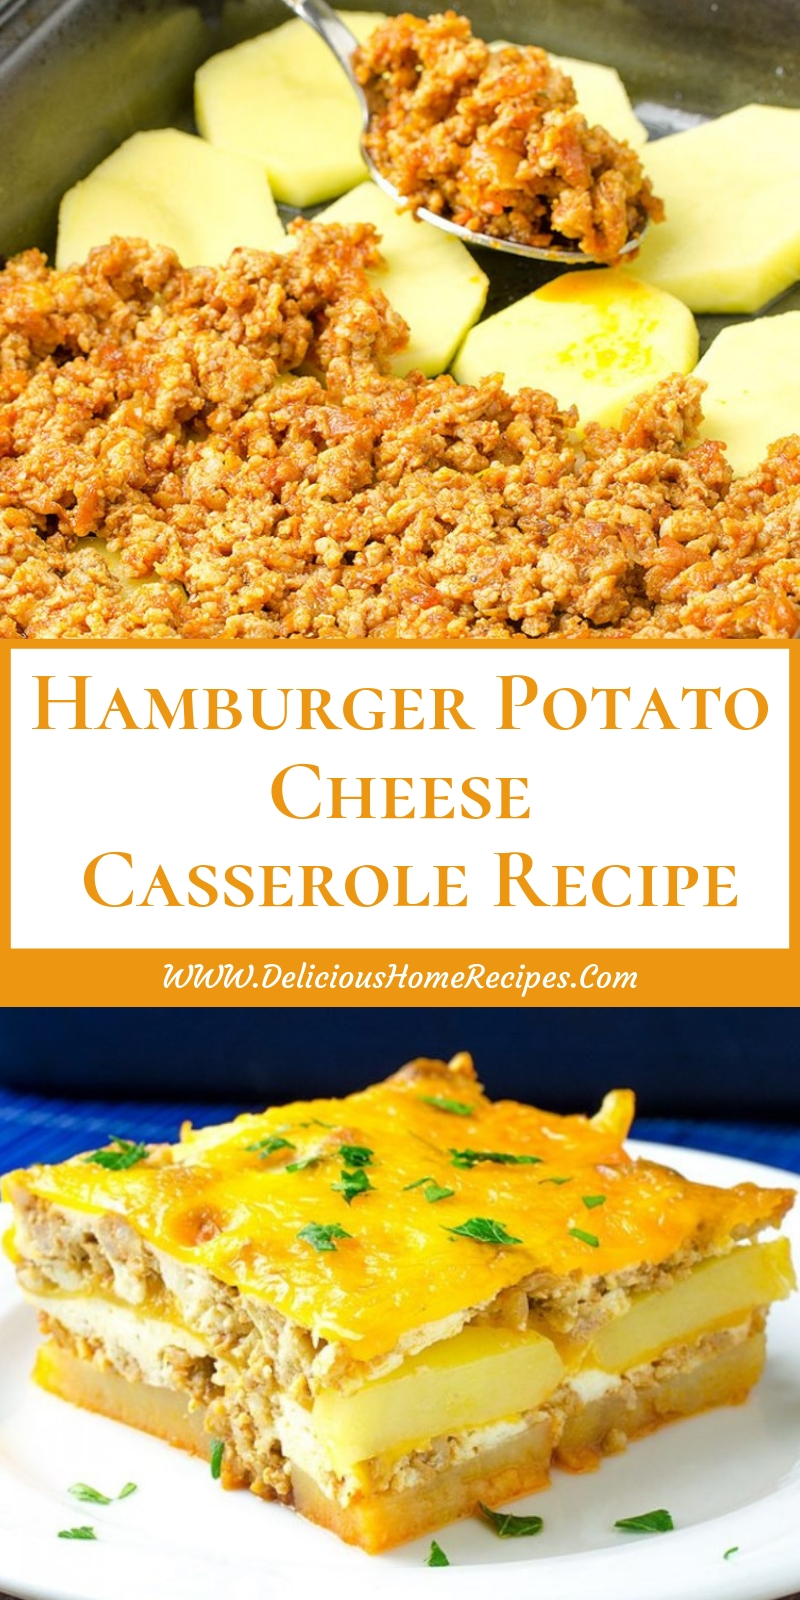 Hamburger Potato Cheese Casserole Recipe